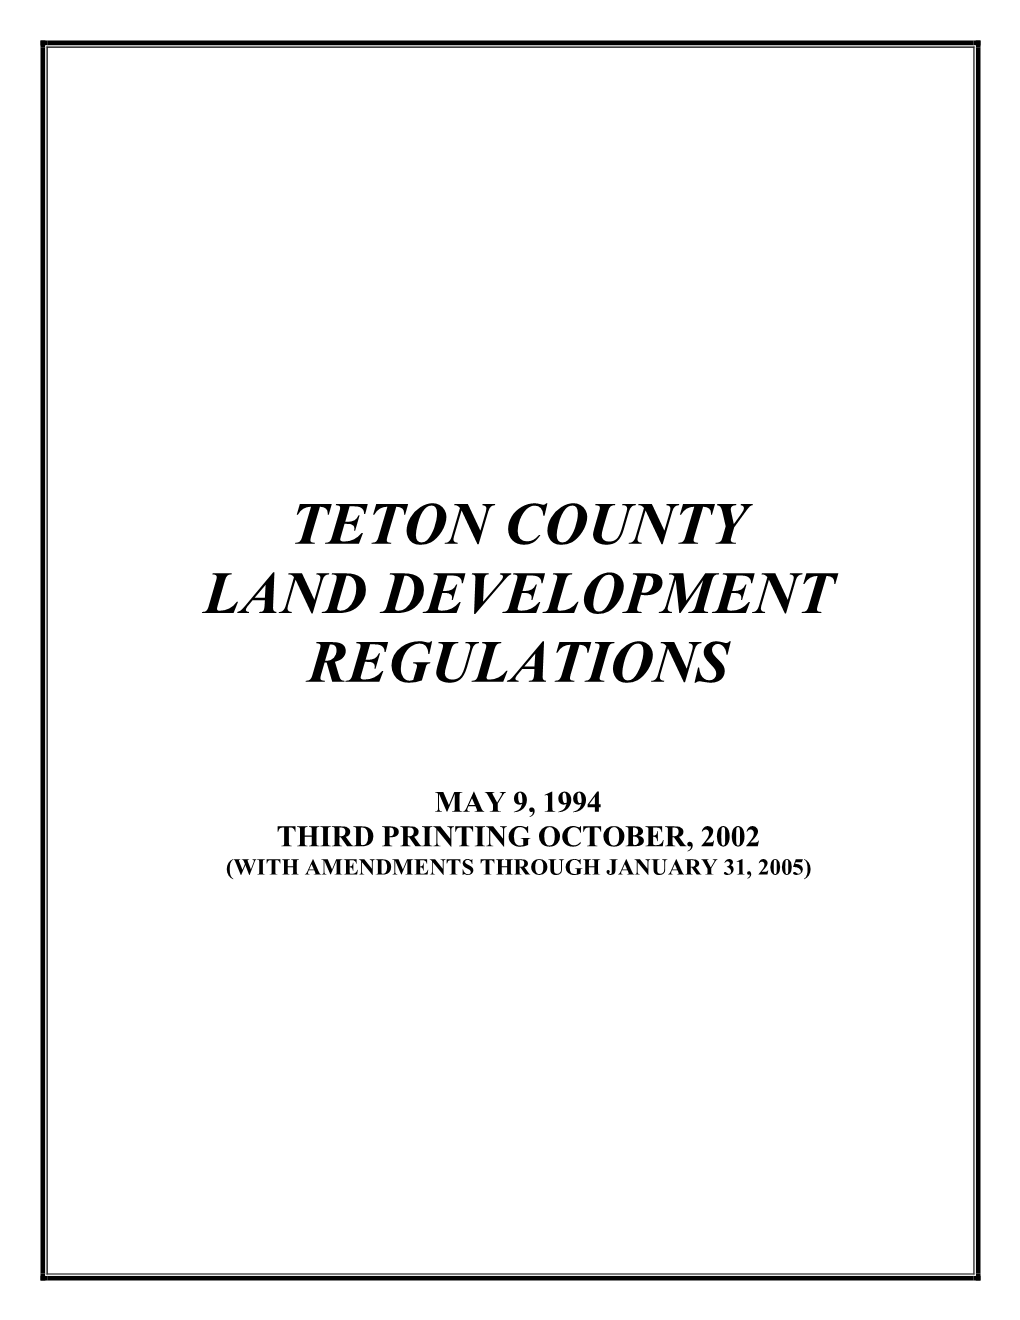 Teton County Land Development Regulations